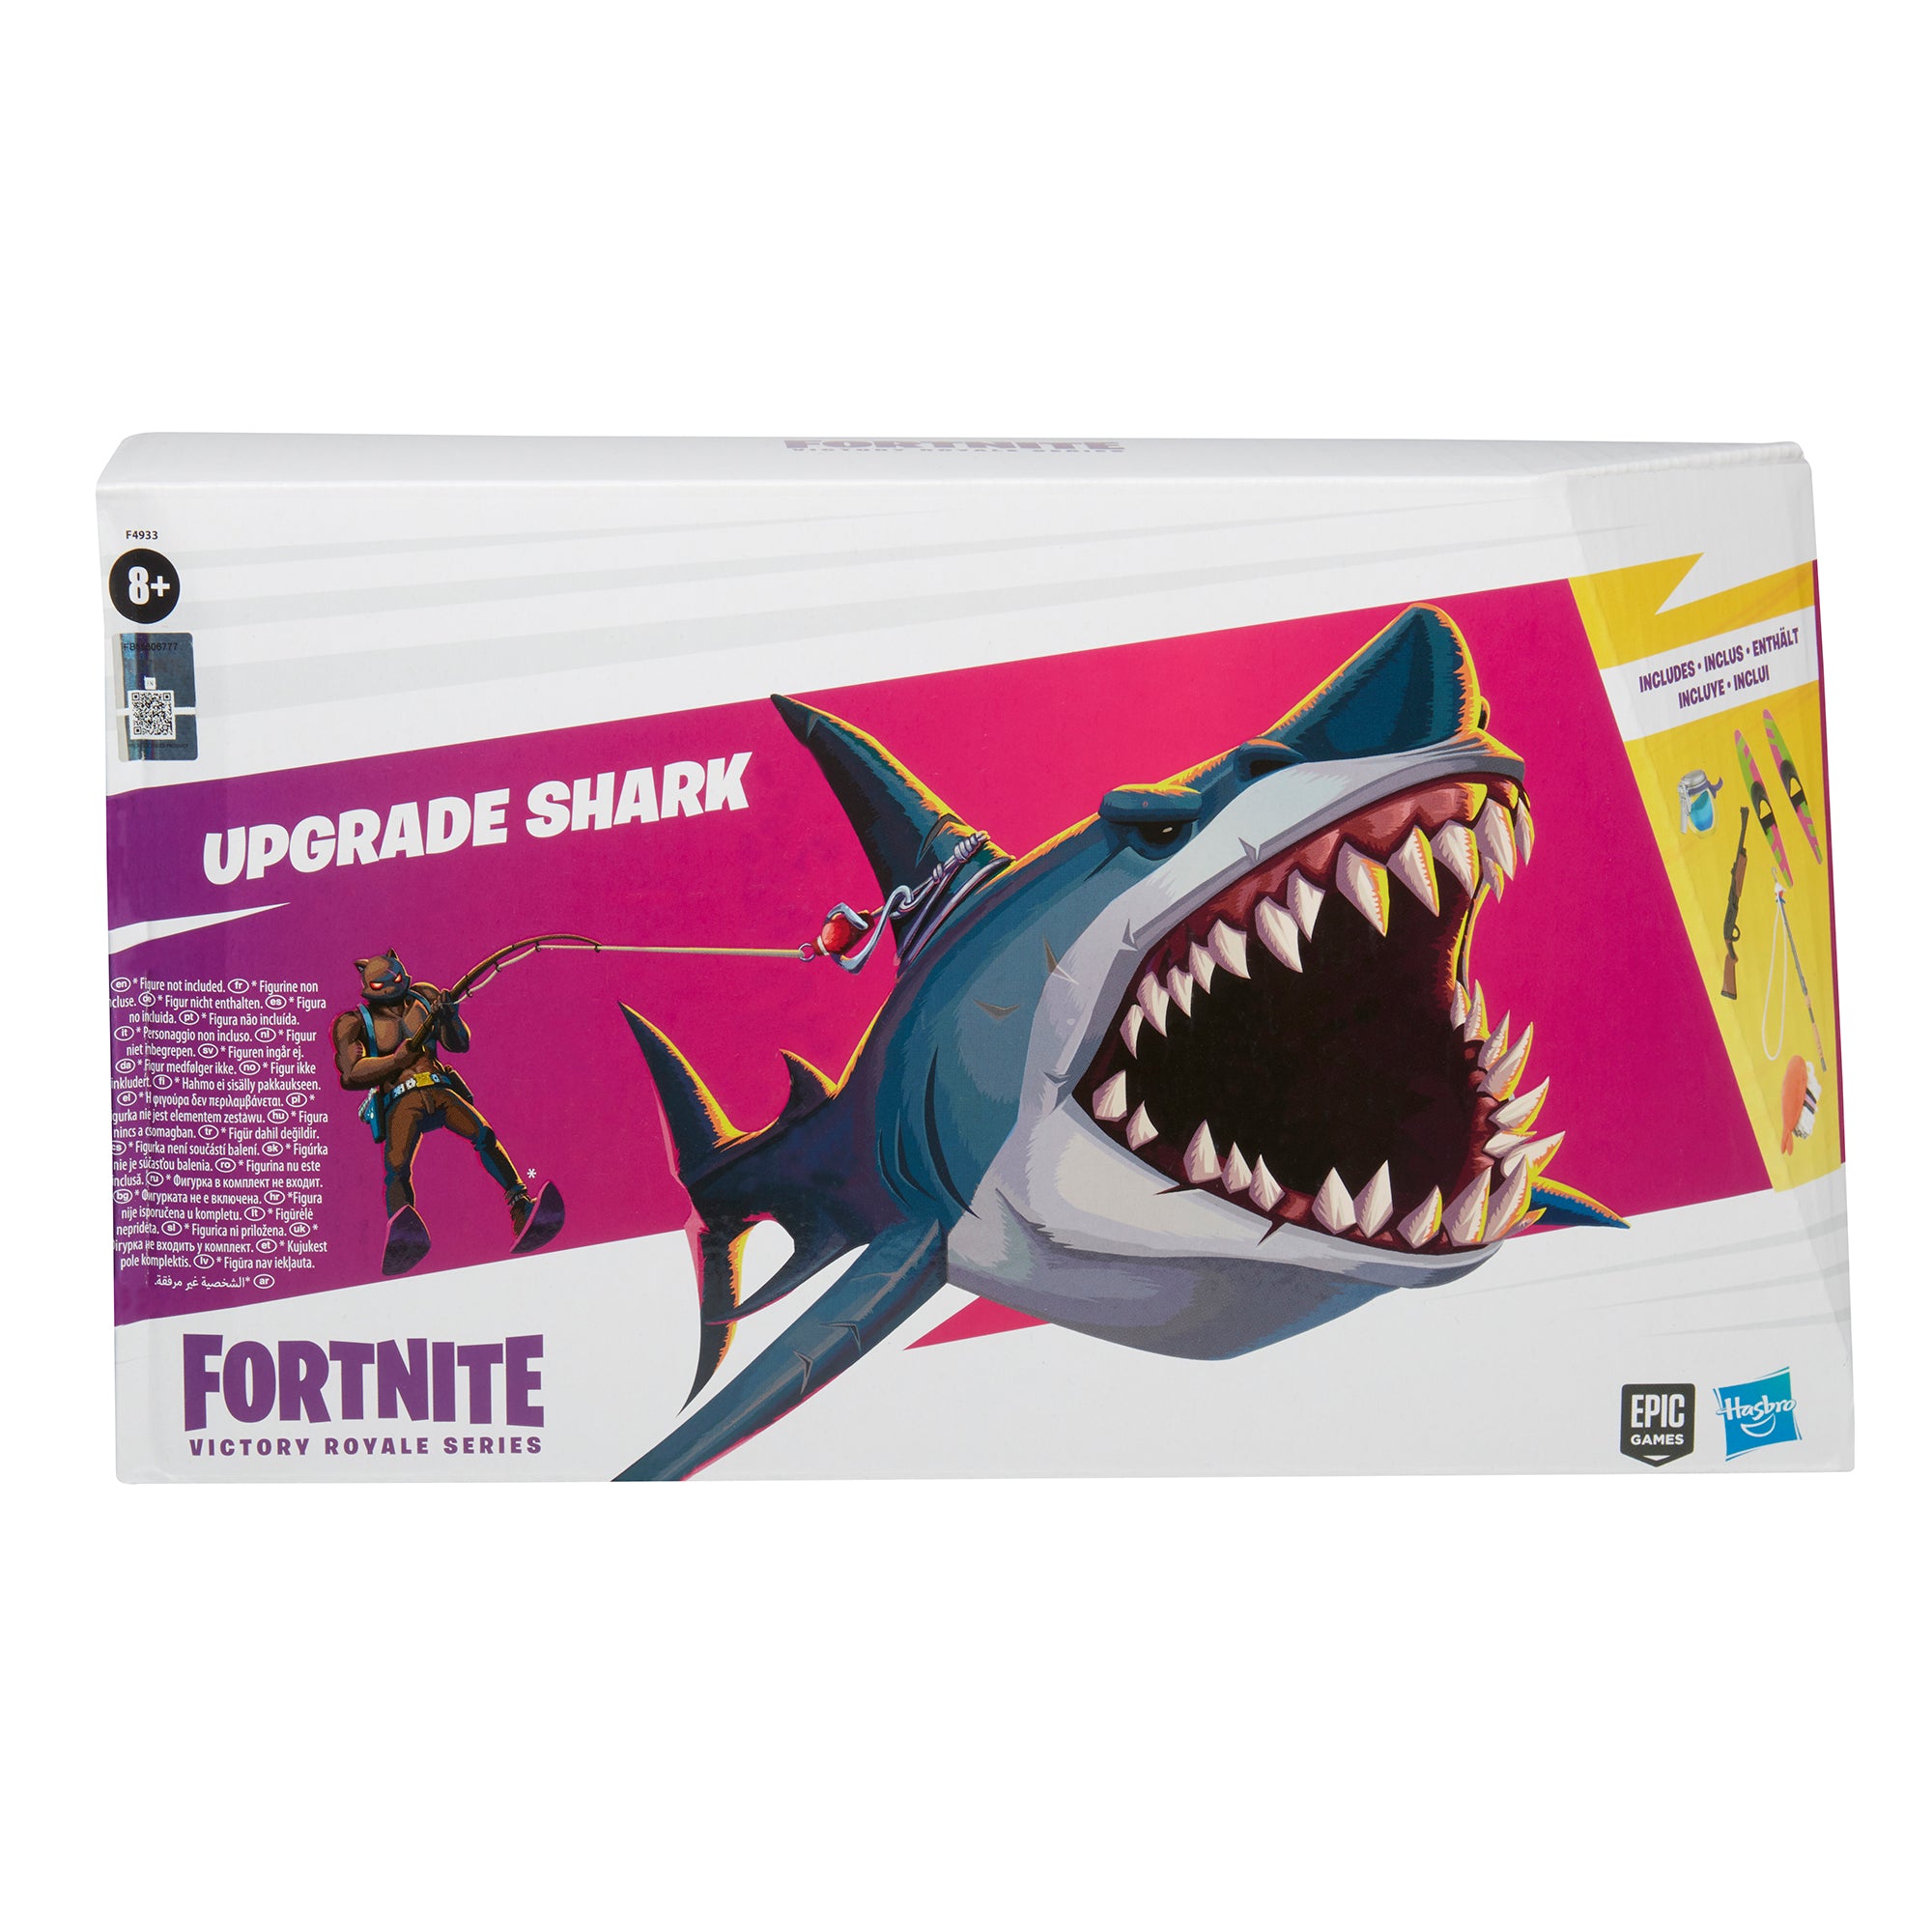 Fortnite Victory Royale Series Upgrade Shark